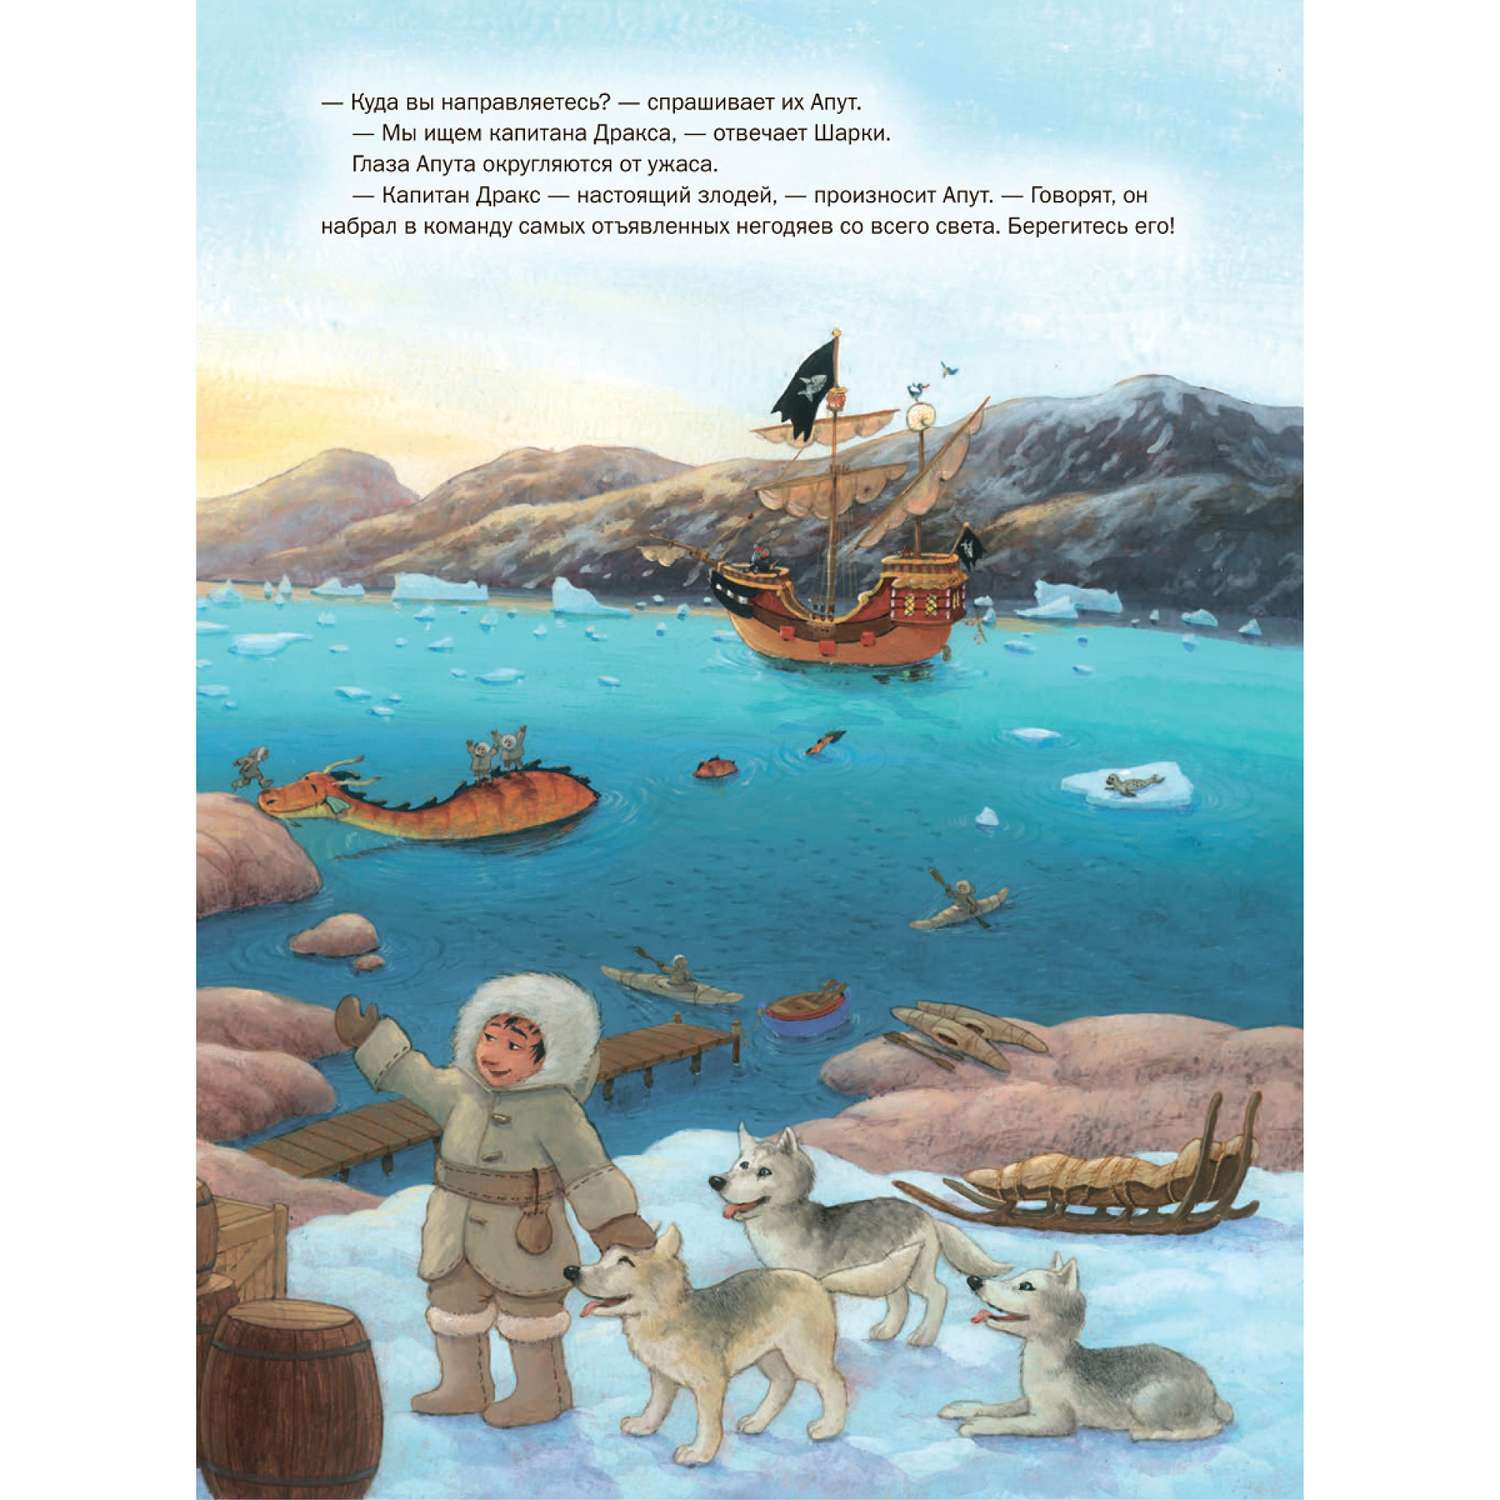 Книга Добрая книга Капитан Шарки спасает малютку кита. Иллюстрации Сильвио Нойендорфа - фото 11